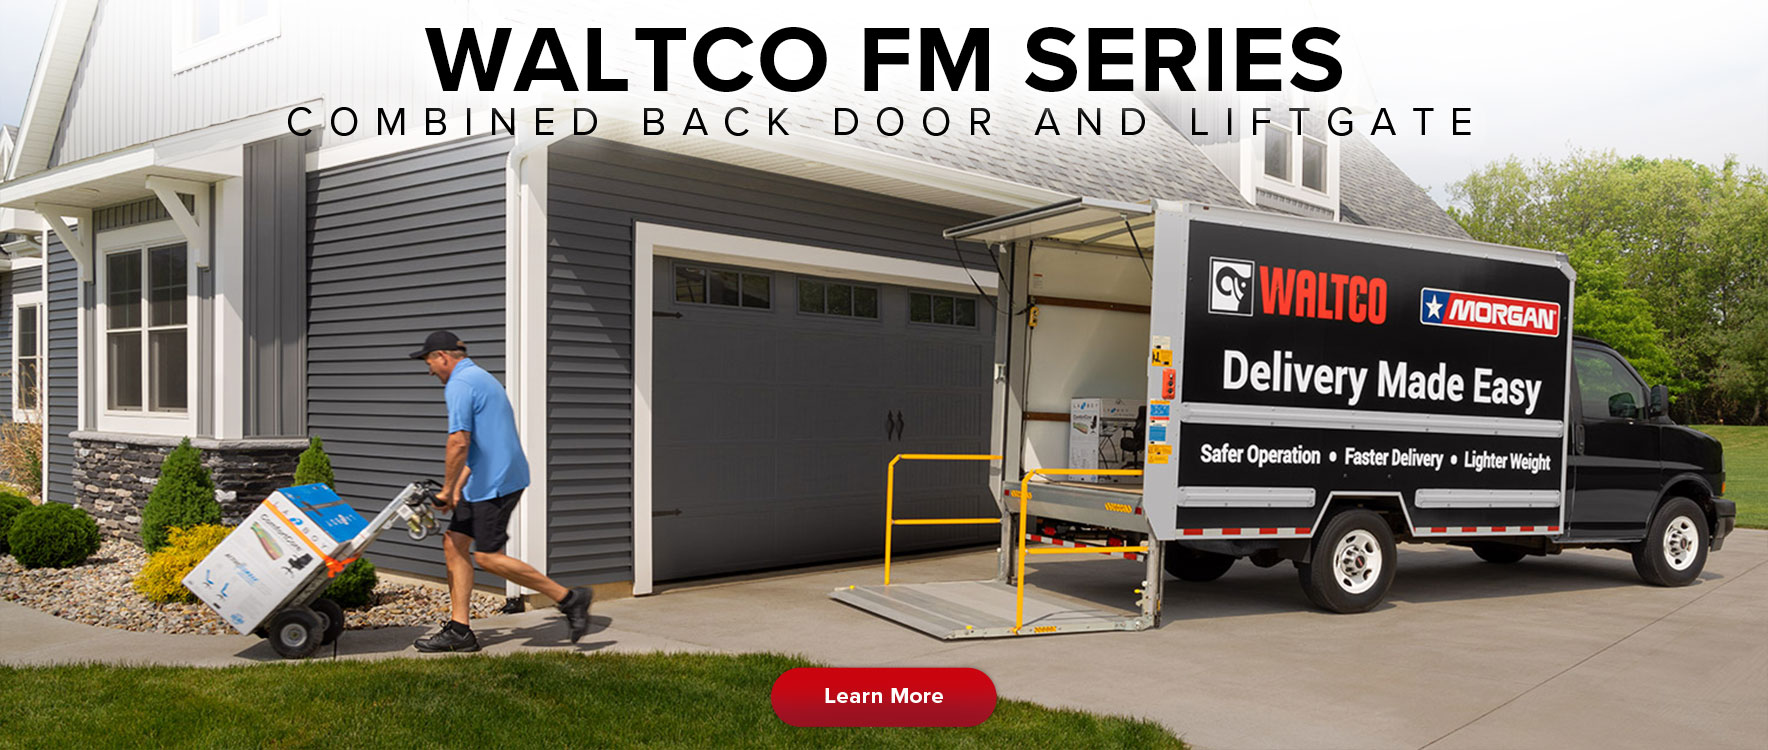 WALTCO FM Series combines back door and liftgate